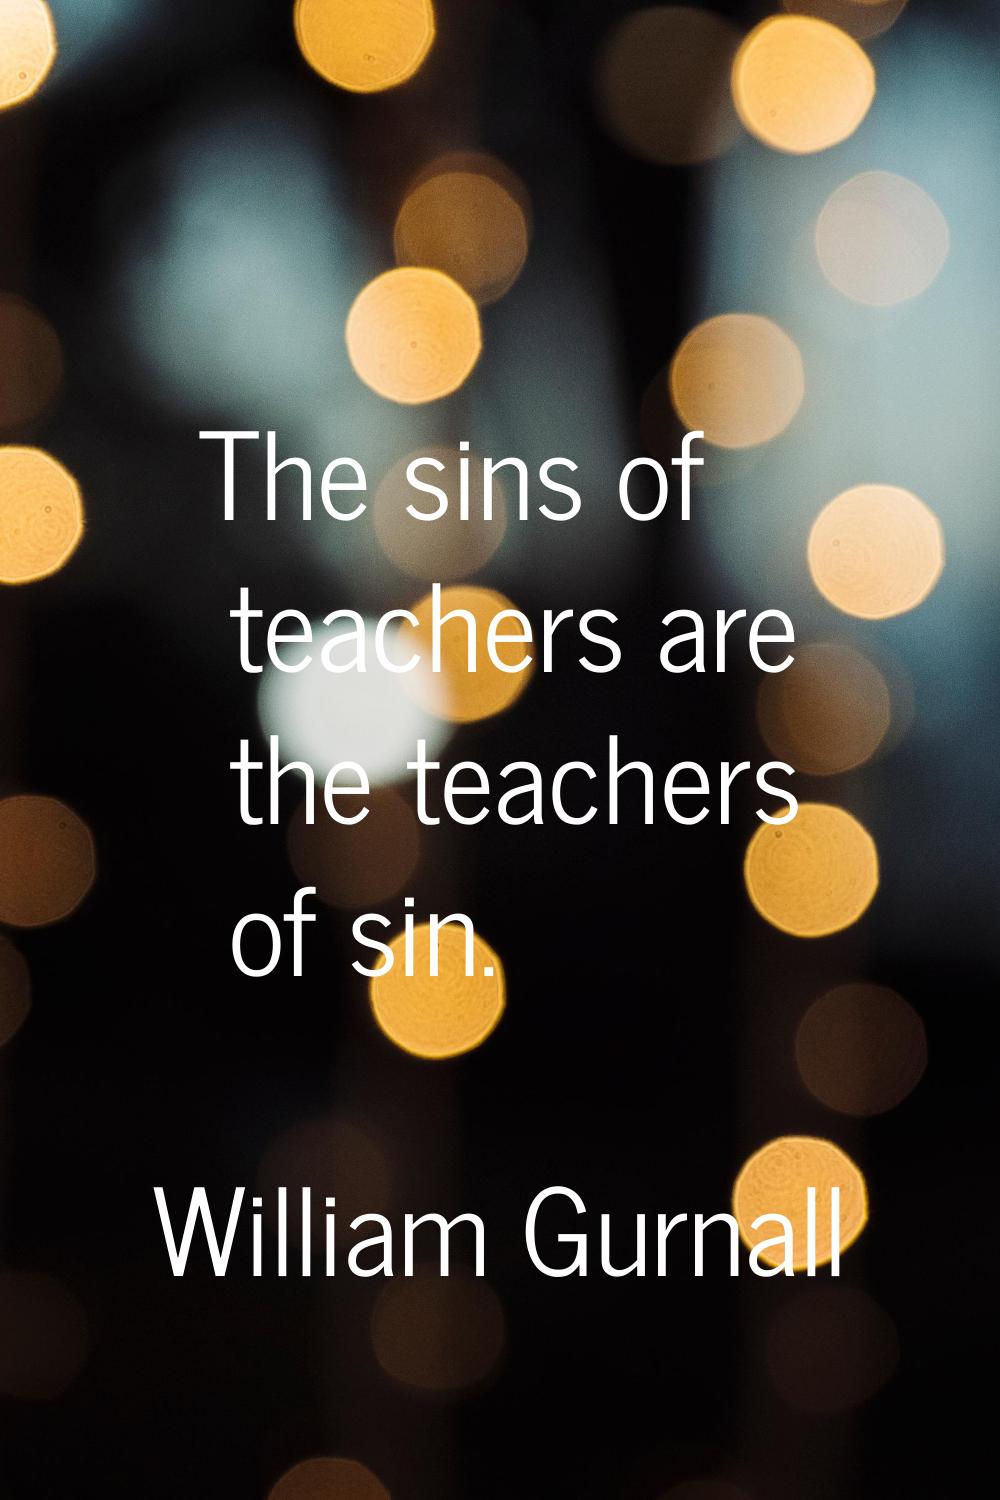 The sins of teachers are the teachers of sin.